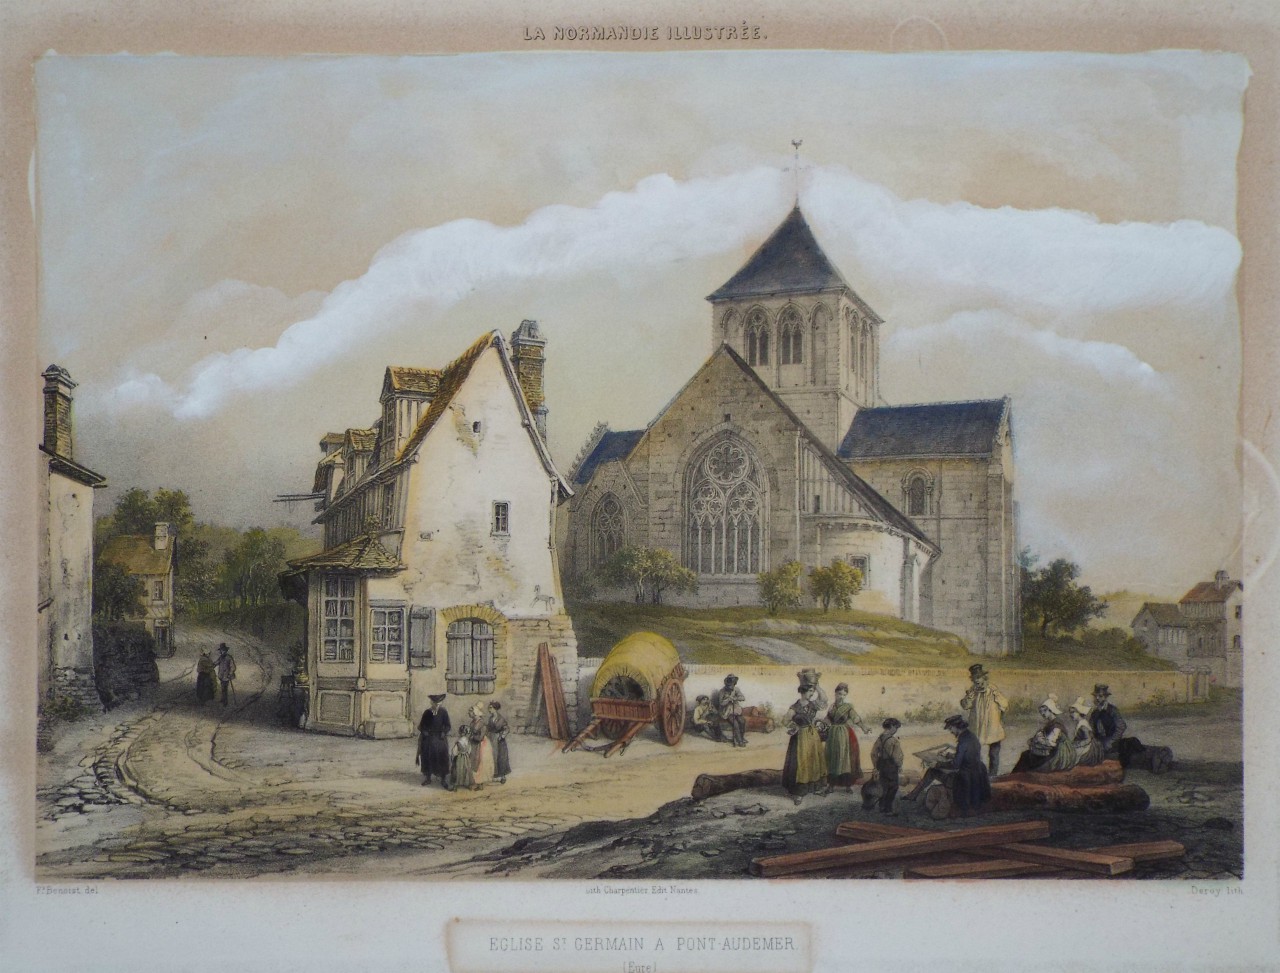 Lithograph - Eglise St. Germain a Pont-Audemer. (Eure) - 